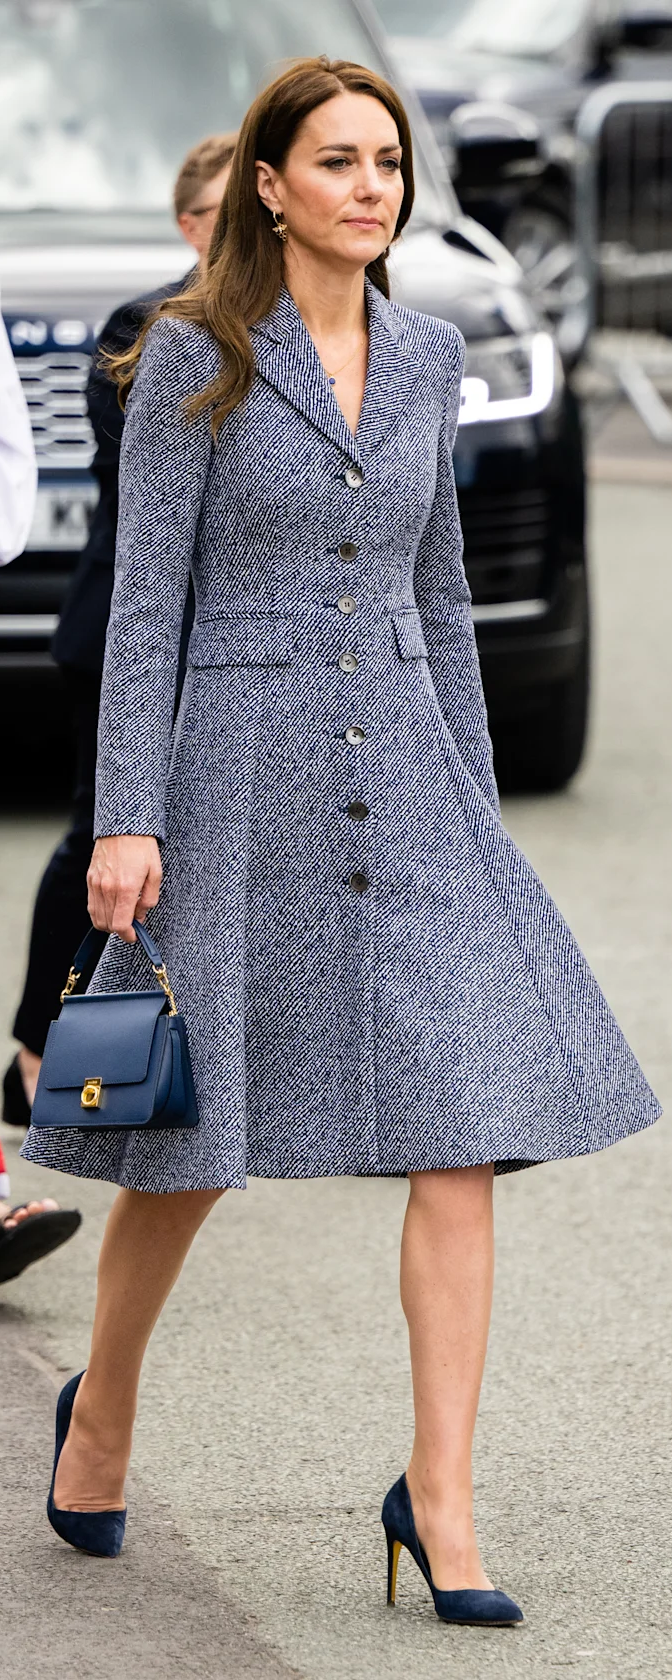 Polène Paris No 7 Mini Bag in Blue Grain Leather as seen on Kate Middleton, The Duchess of Cambridge.